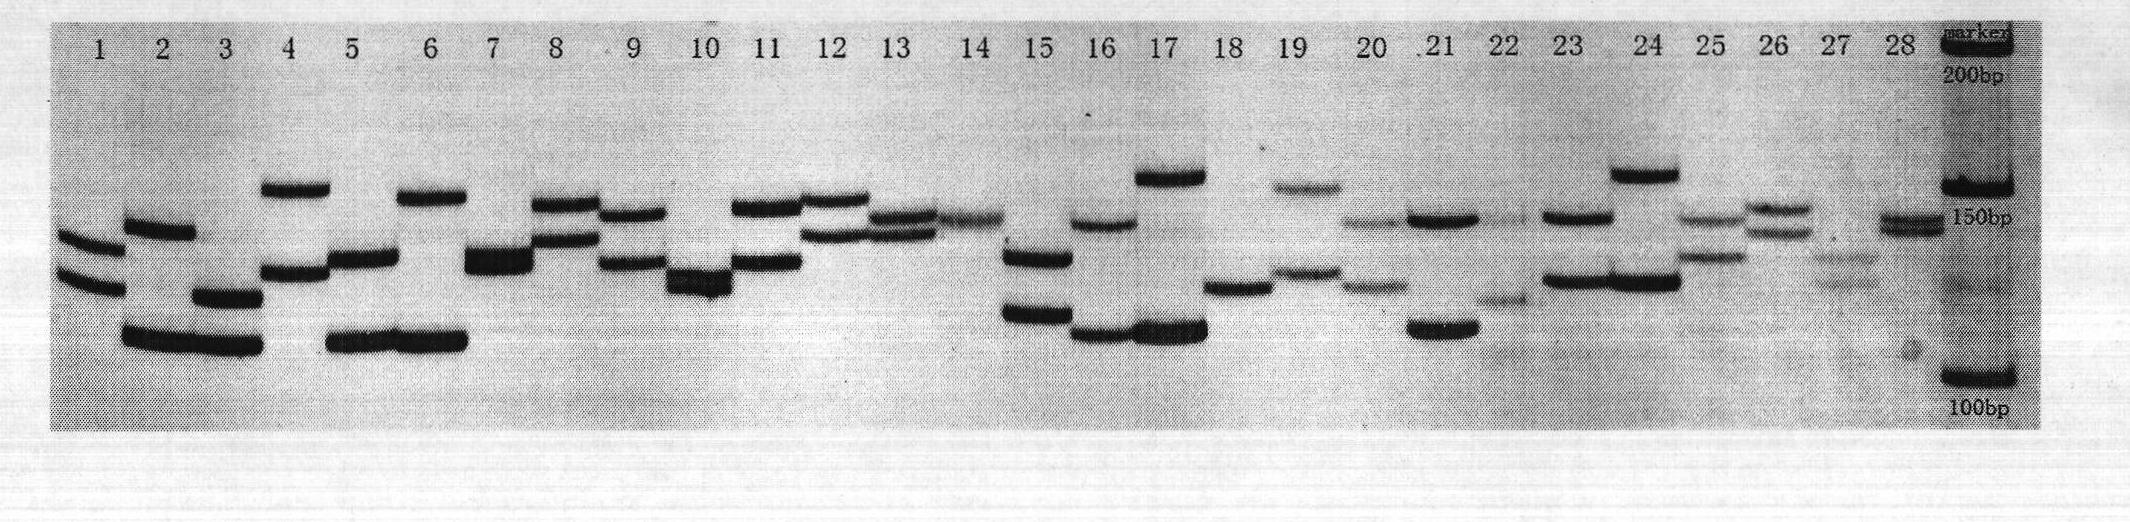 Method for detecting Jassr131 microsatellite deoxyribonucleic acid (DNA) marker of Charybdis japonica